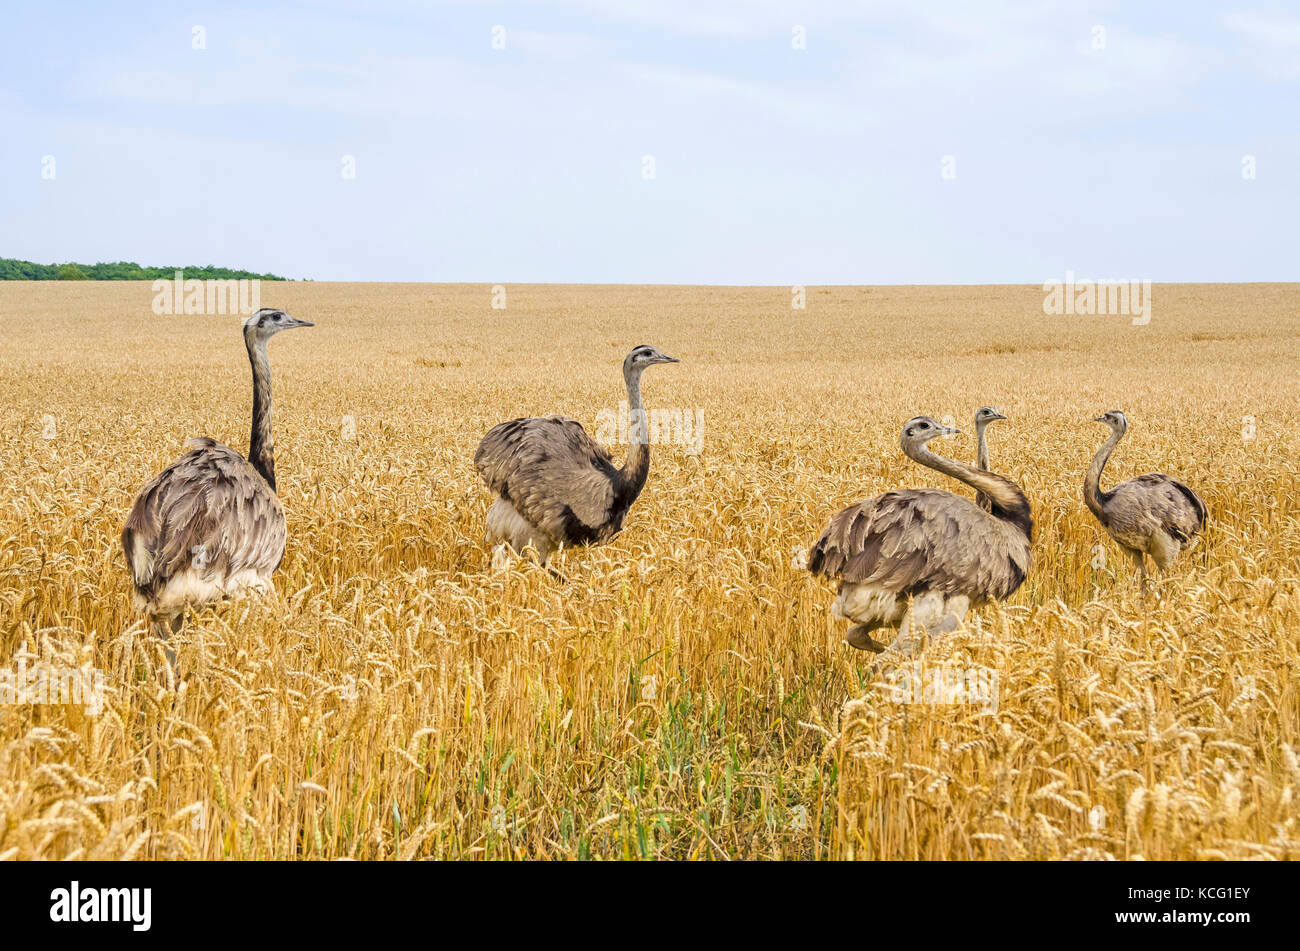 American greater rheas (Nandu, Rhea americana) walking through the grainfield in Mecklenburg-West Pomerania, Germany. The ratites have erupted 15 year Stock Photo